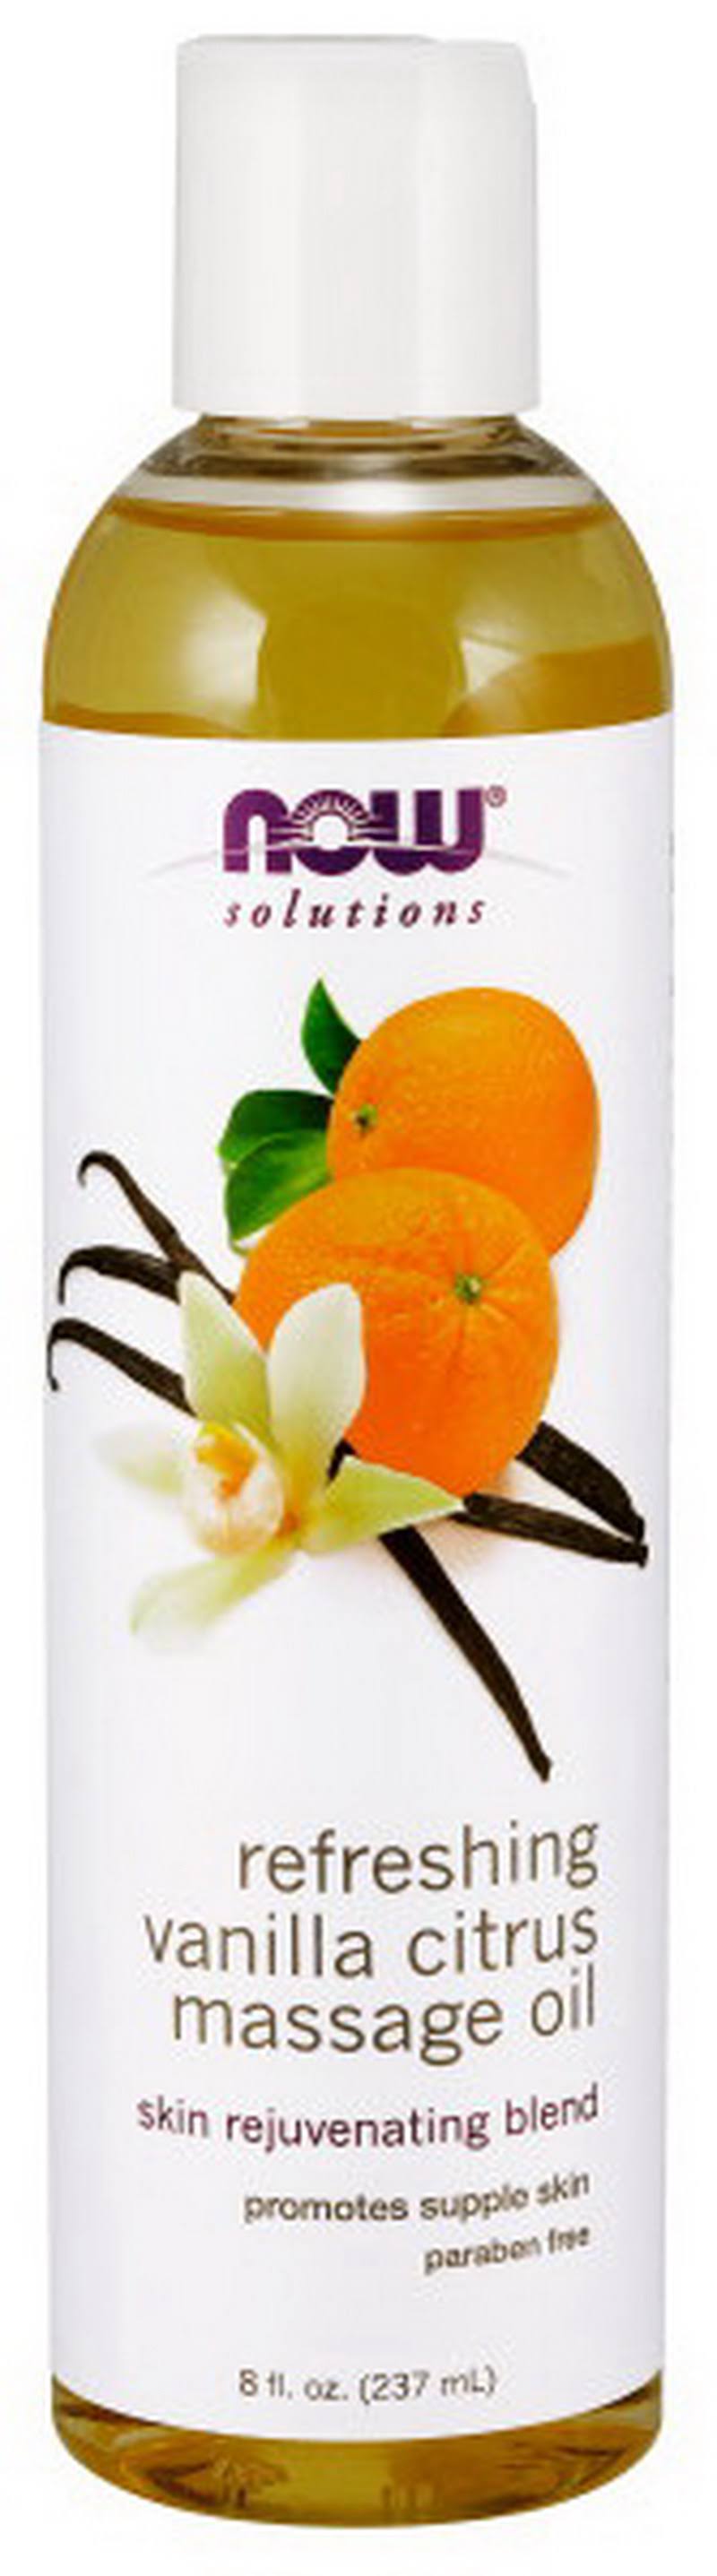 Now Foods Solutions Refreshing Vanilla Citrus Massage Oil 8 fl oz